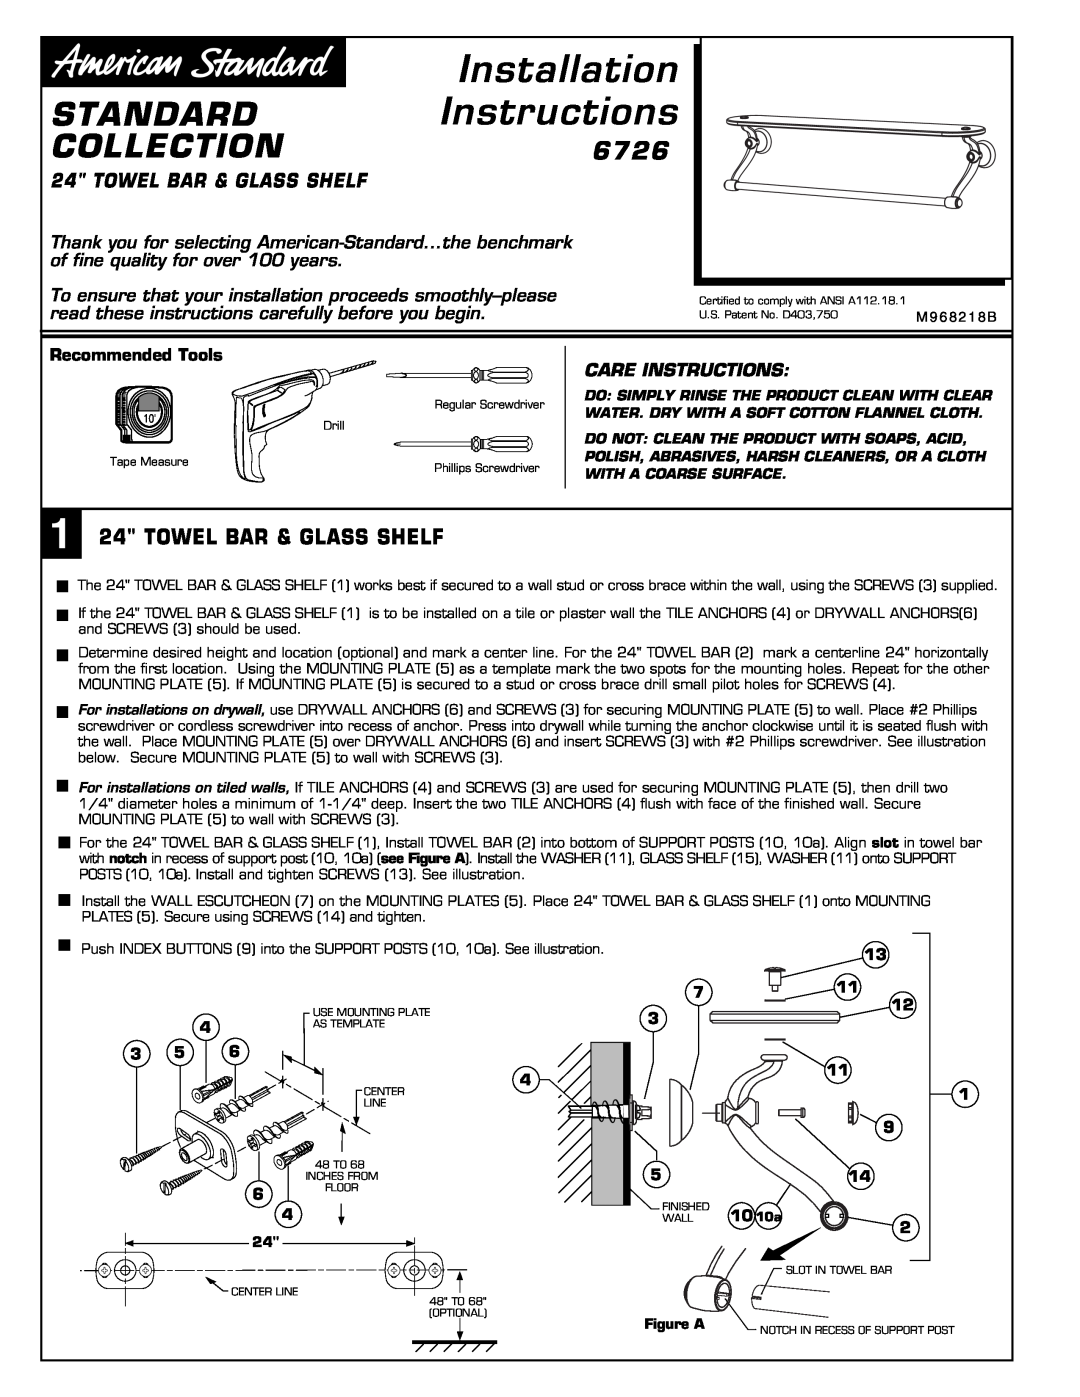 American Standard 6726 installation instructions Standard, Collection, Towel Bar & Glass Shelf, Care Instructions 